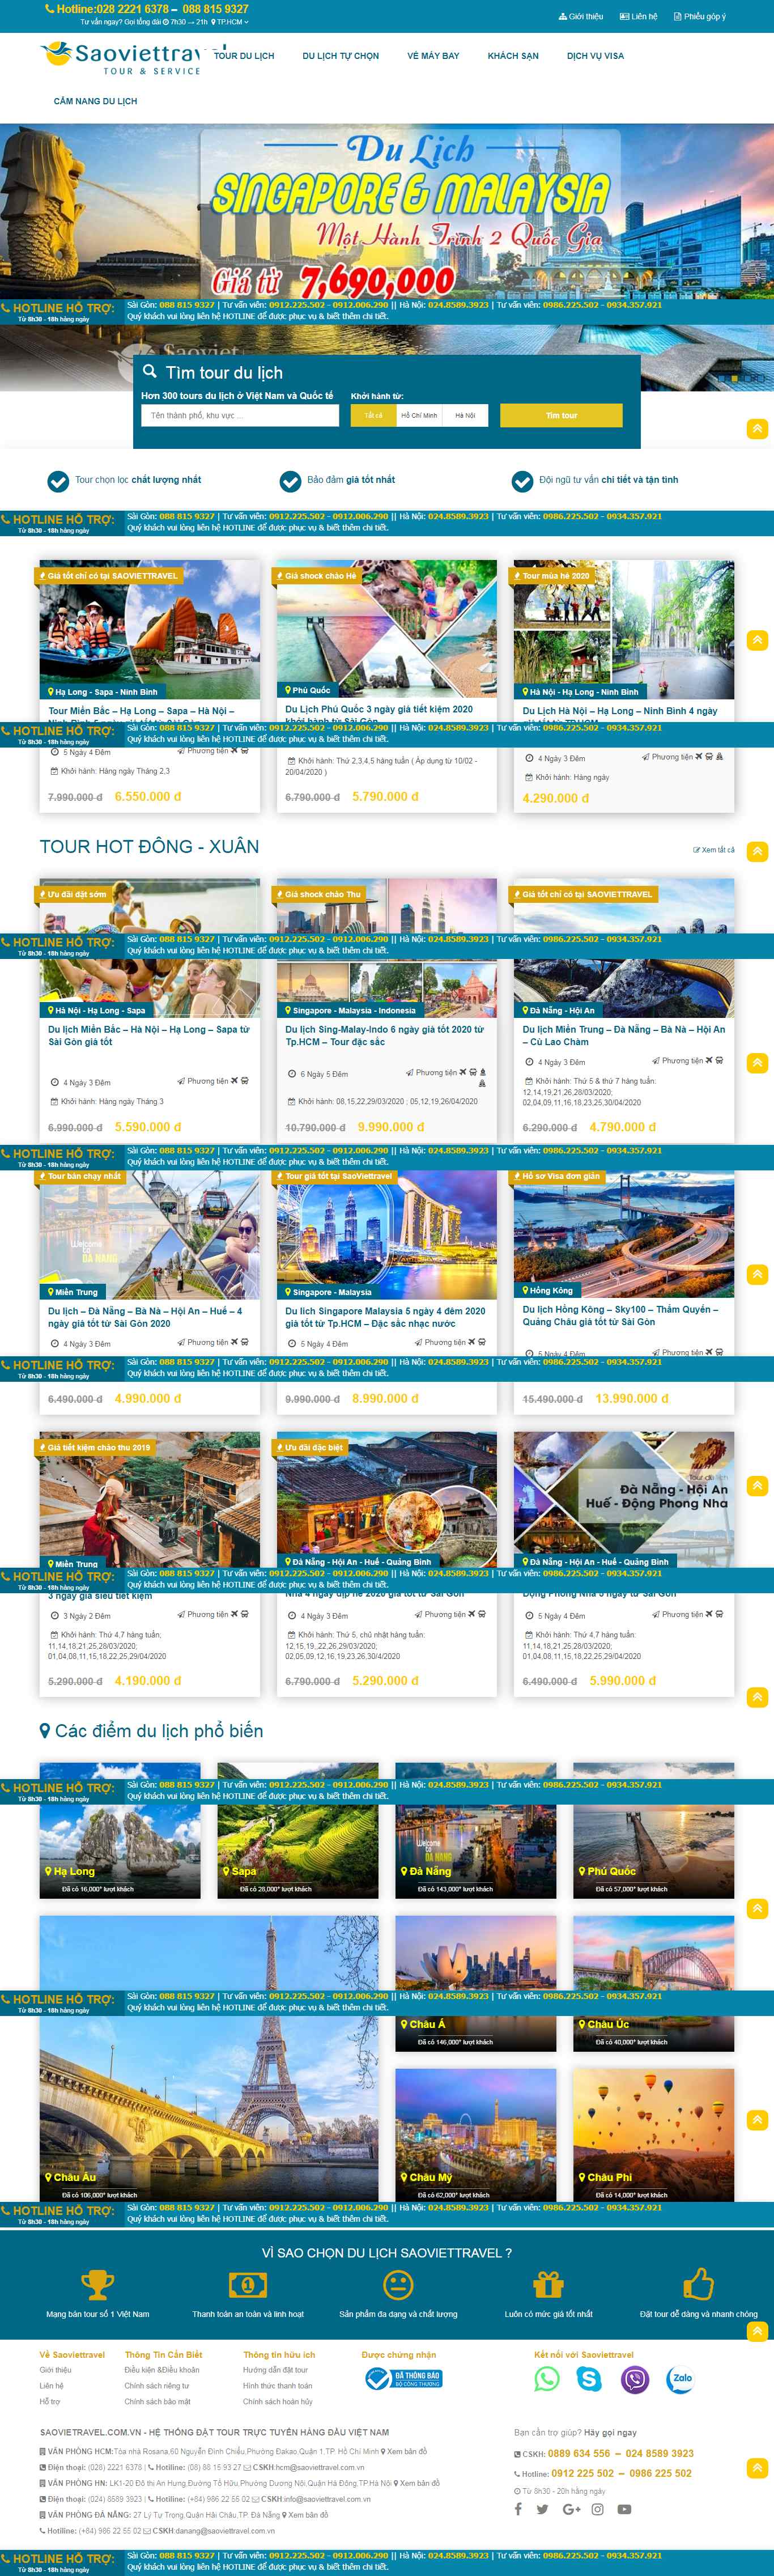 Thiết kế Website tour du lịch - saoviettravel.com.vn